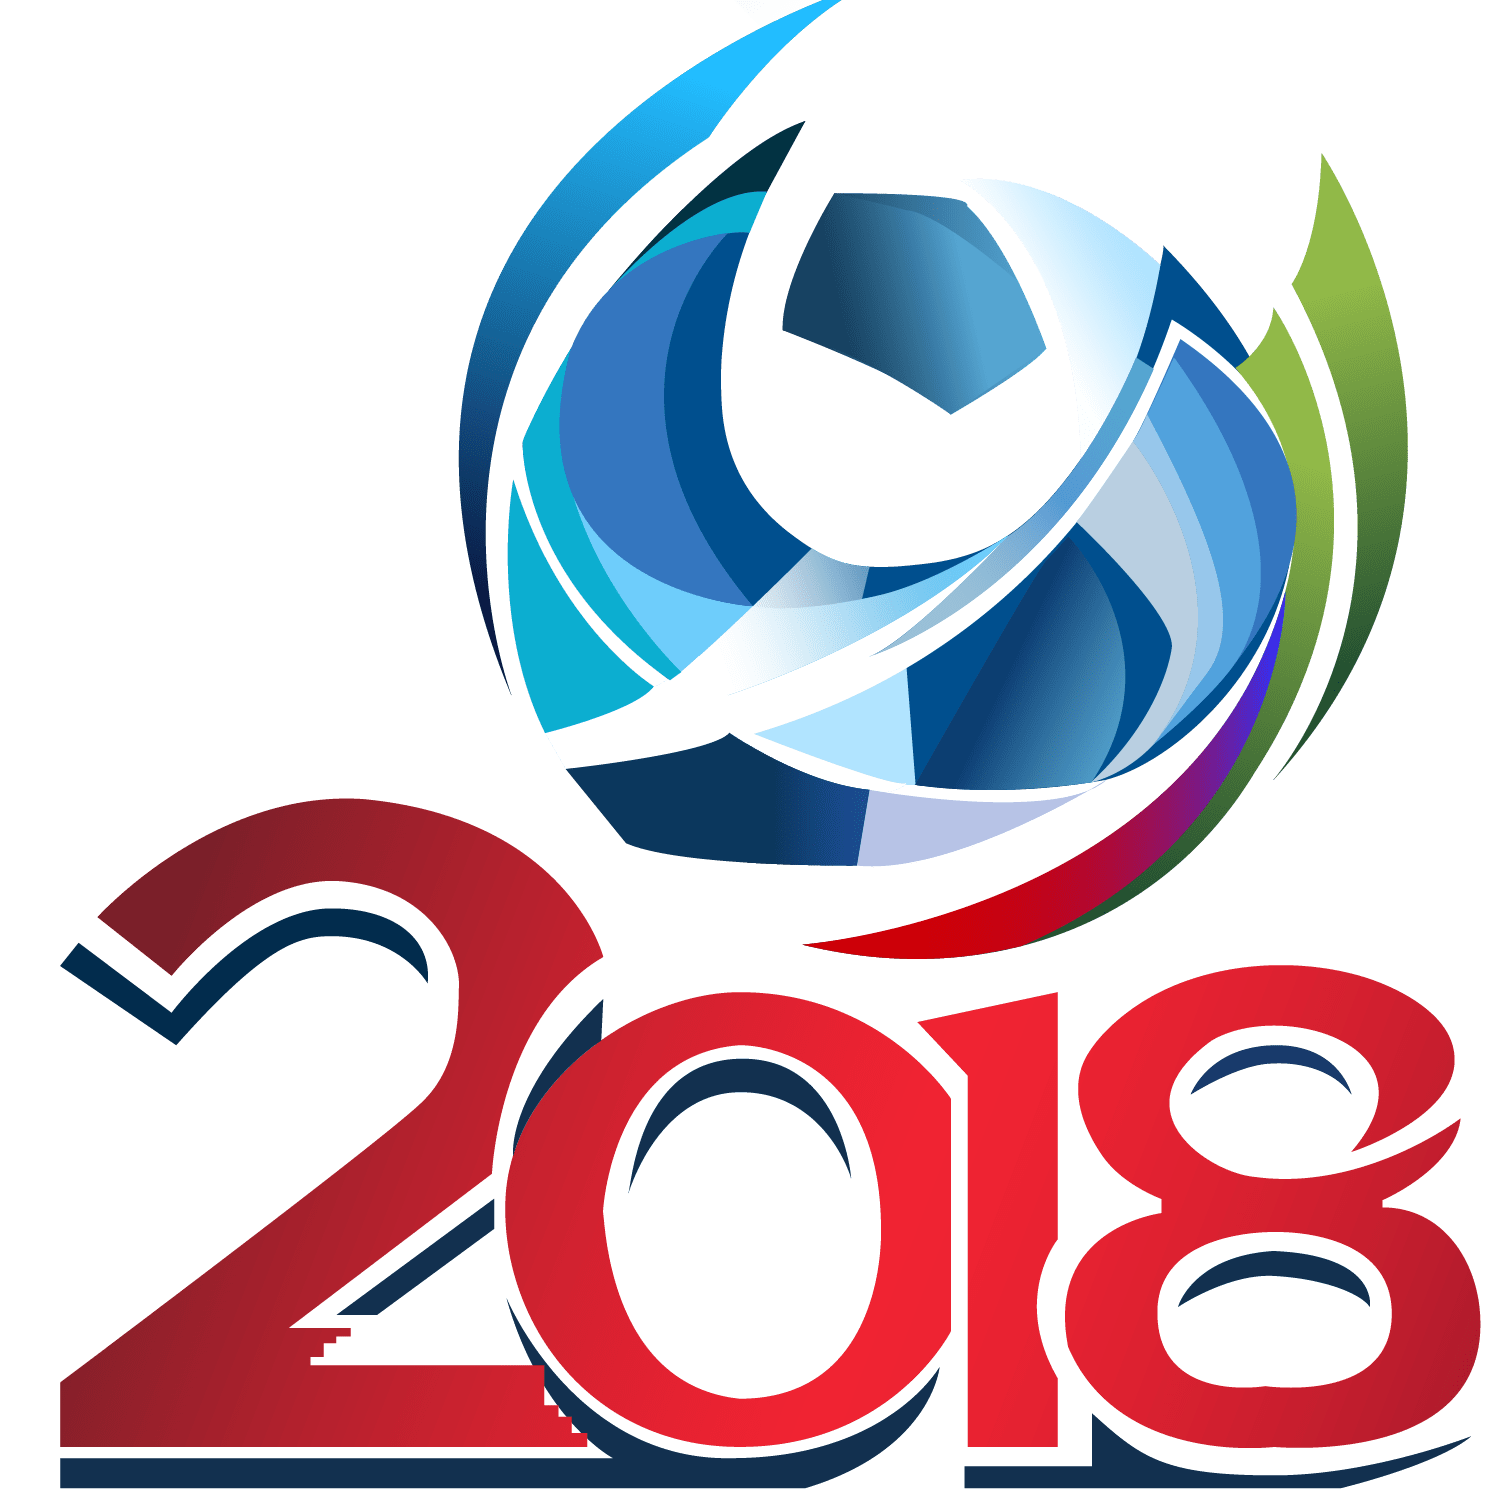 2018 soccer PNG Image